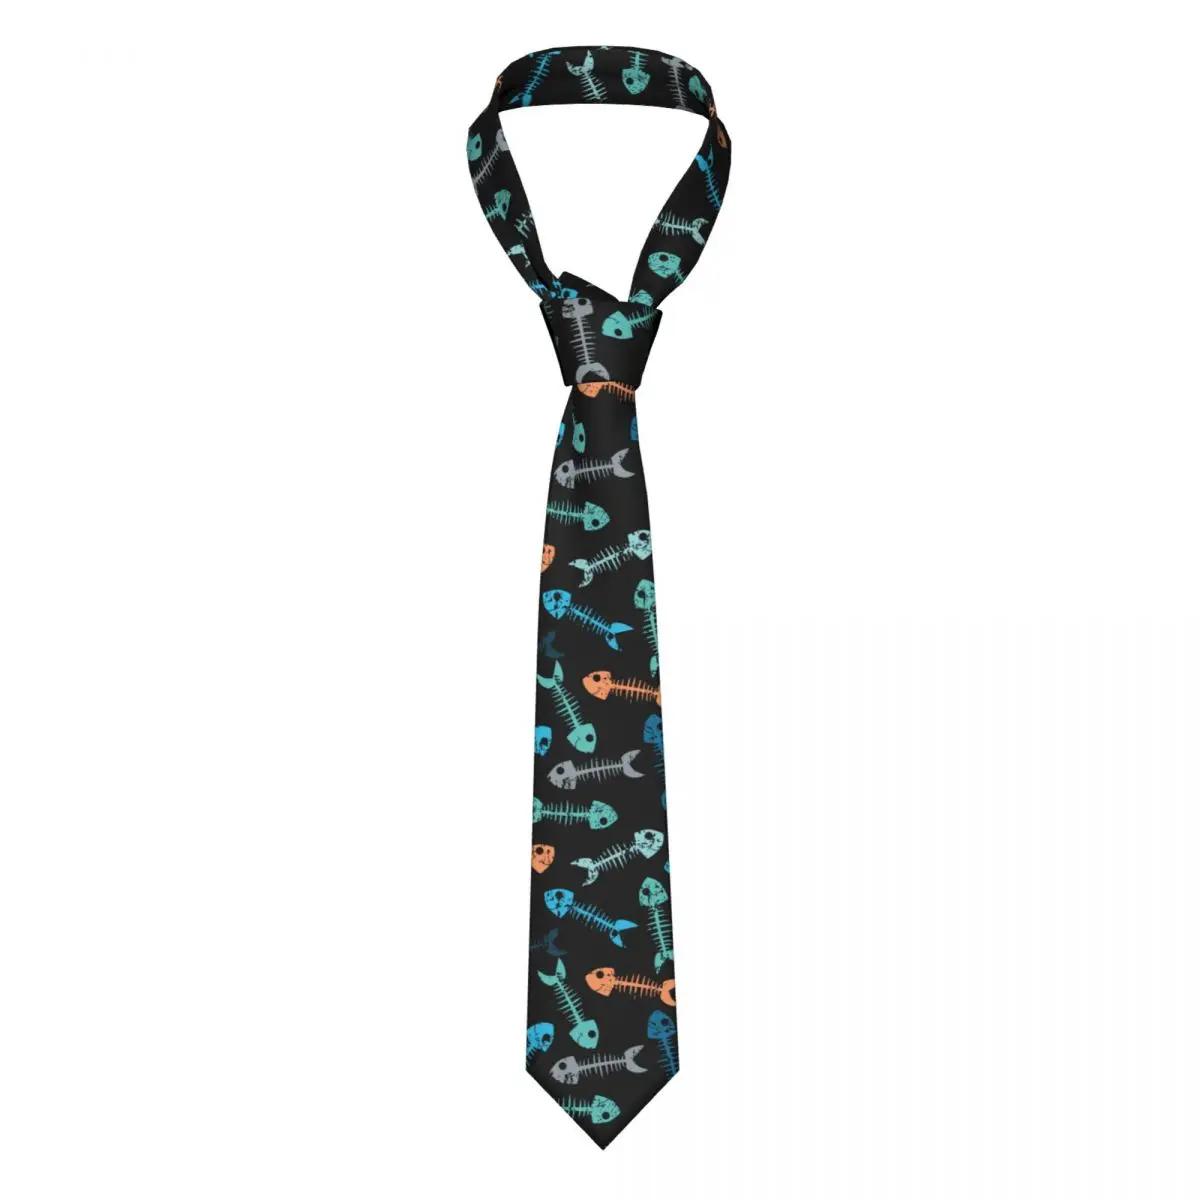 Fish Bones Necktie UniPolyester 8 cm Neck Tie for Men Fashion Wide Suits Accessories Gravatas Gift